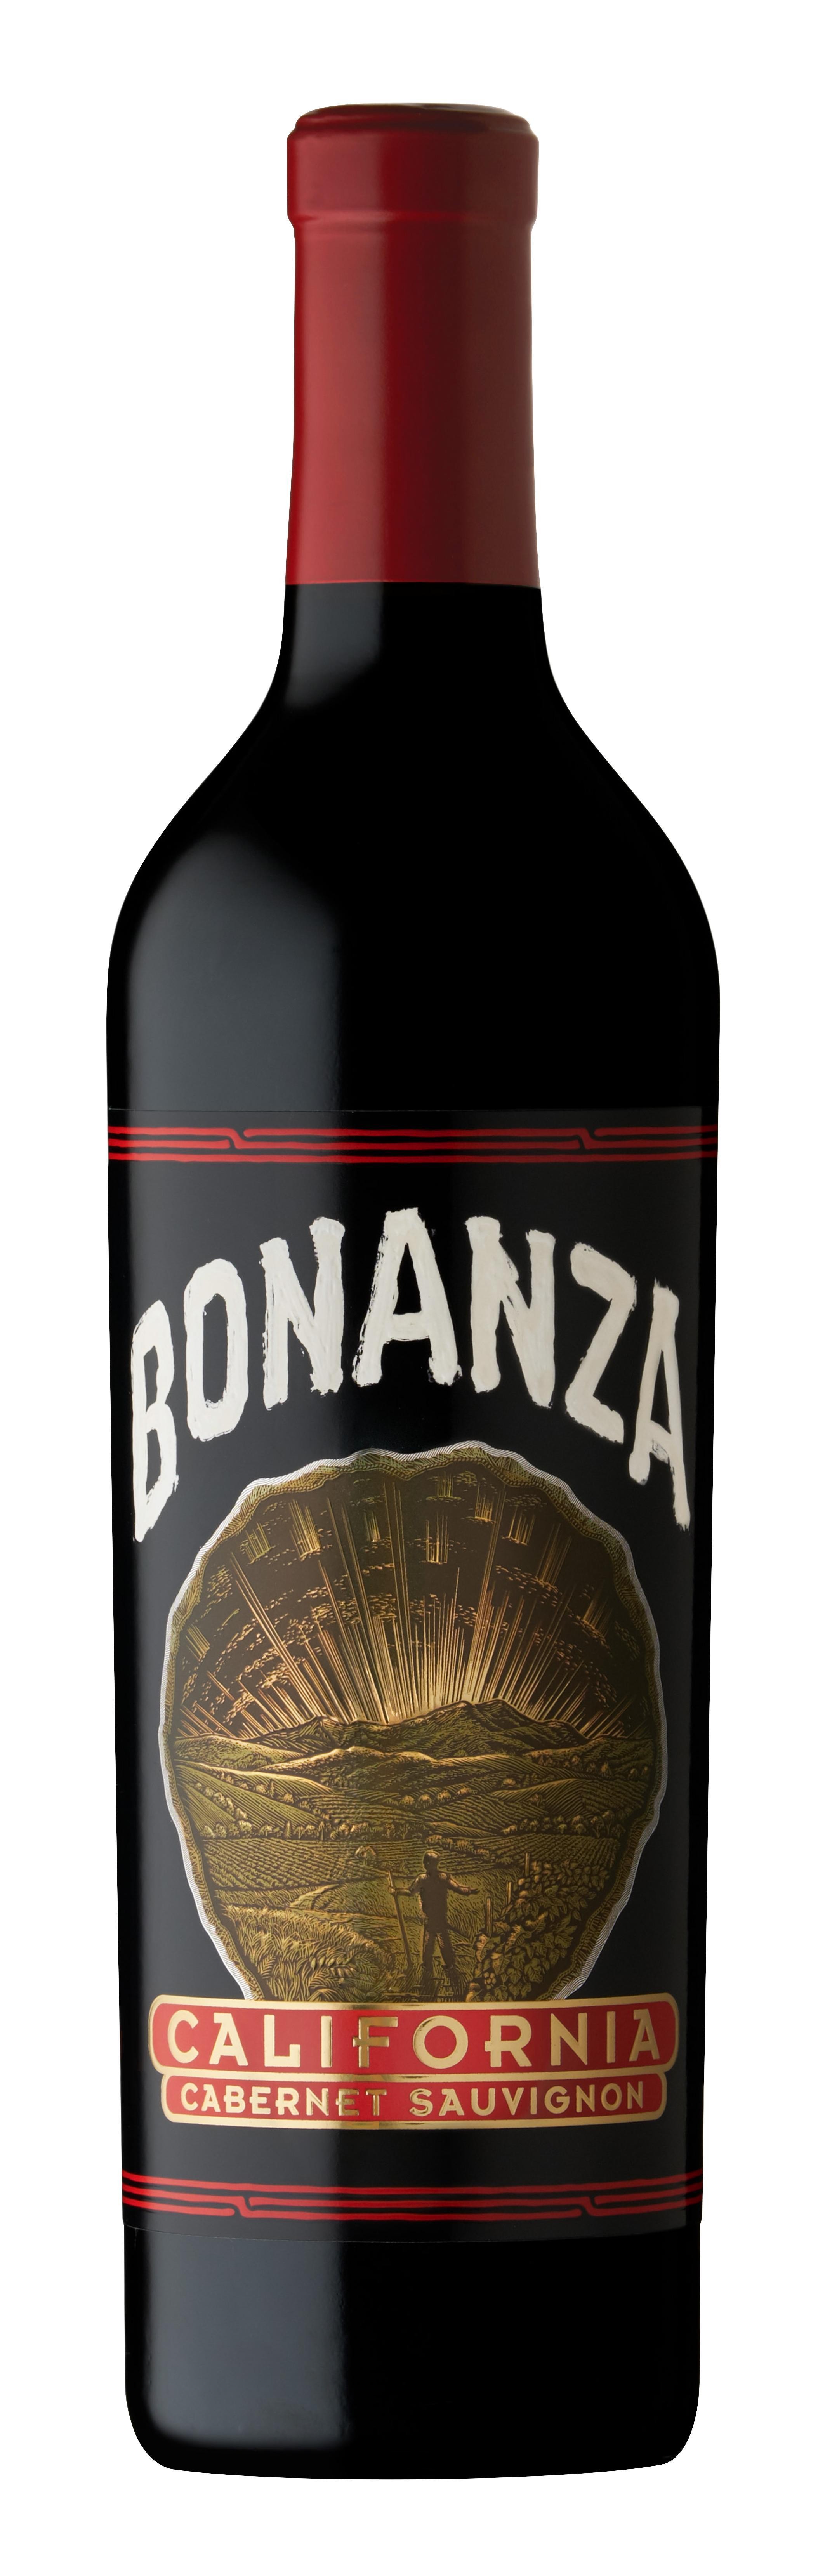 Bonanza Cabernet Sauvignon 750ml Bottle